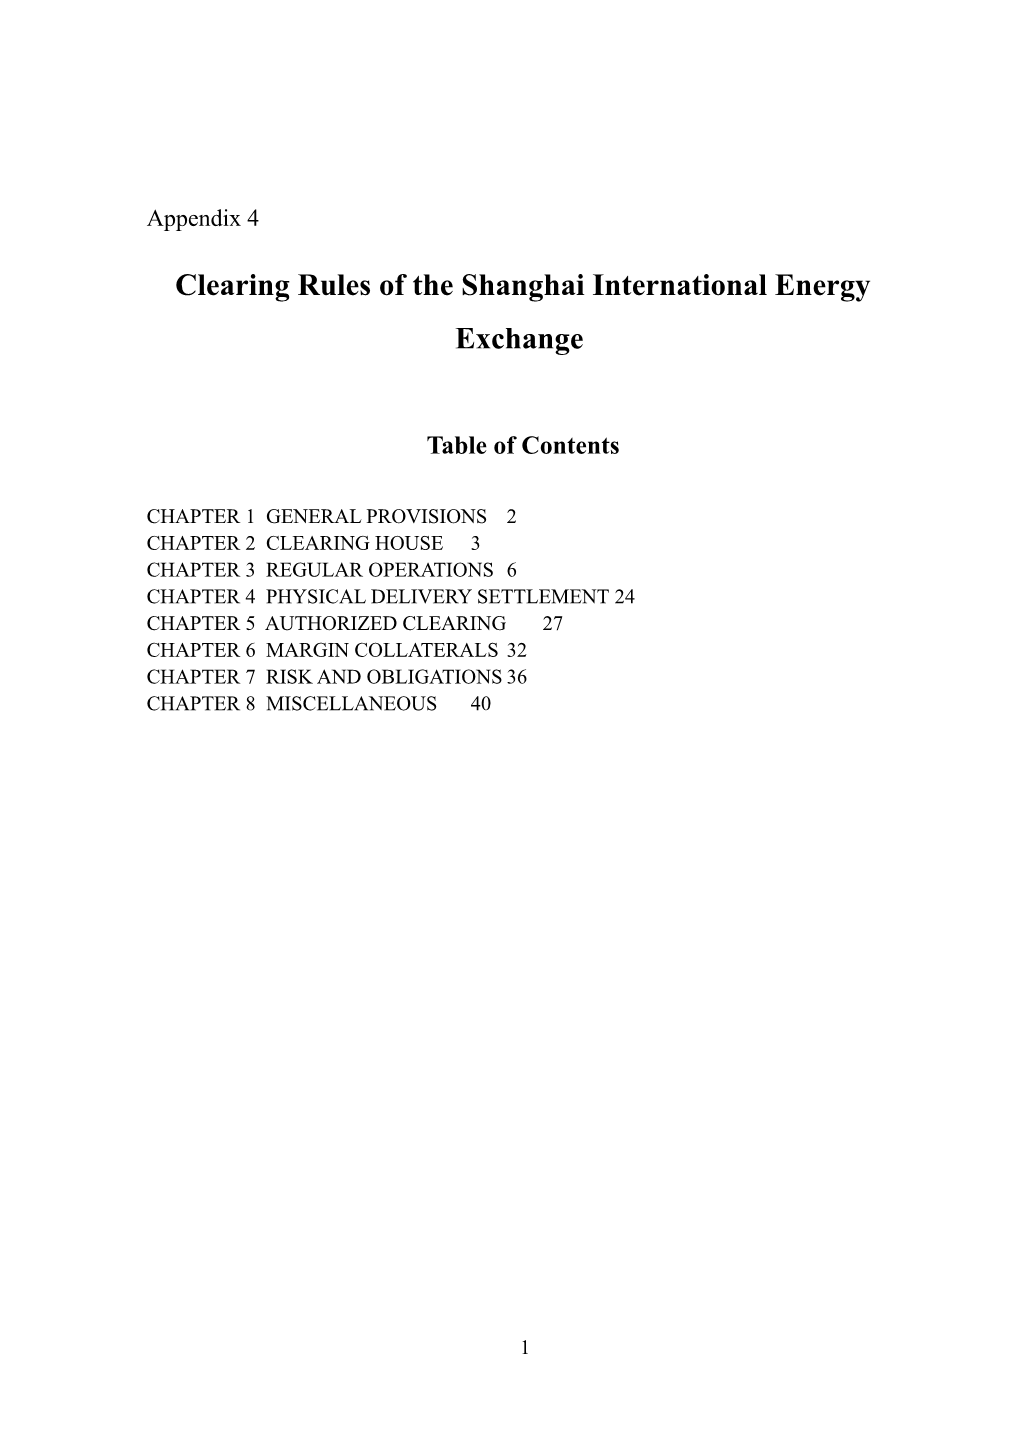 Clearing Rulesof the Shanghai International Energy Exchange